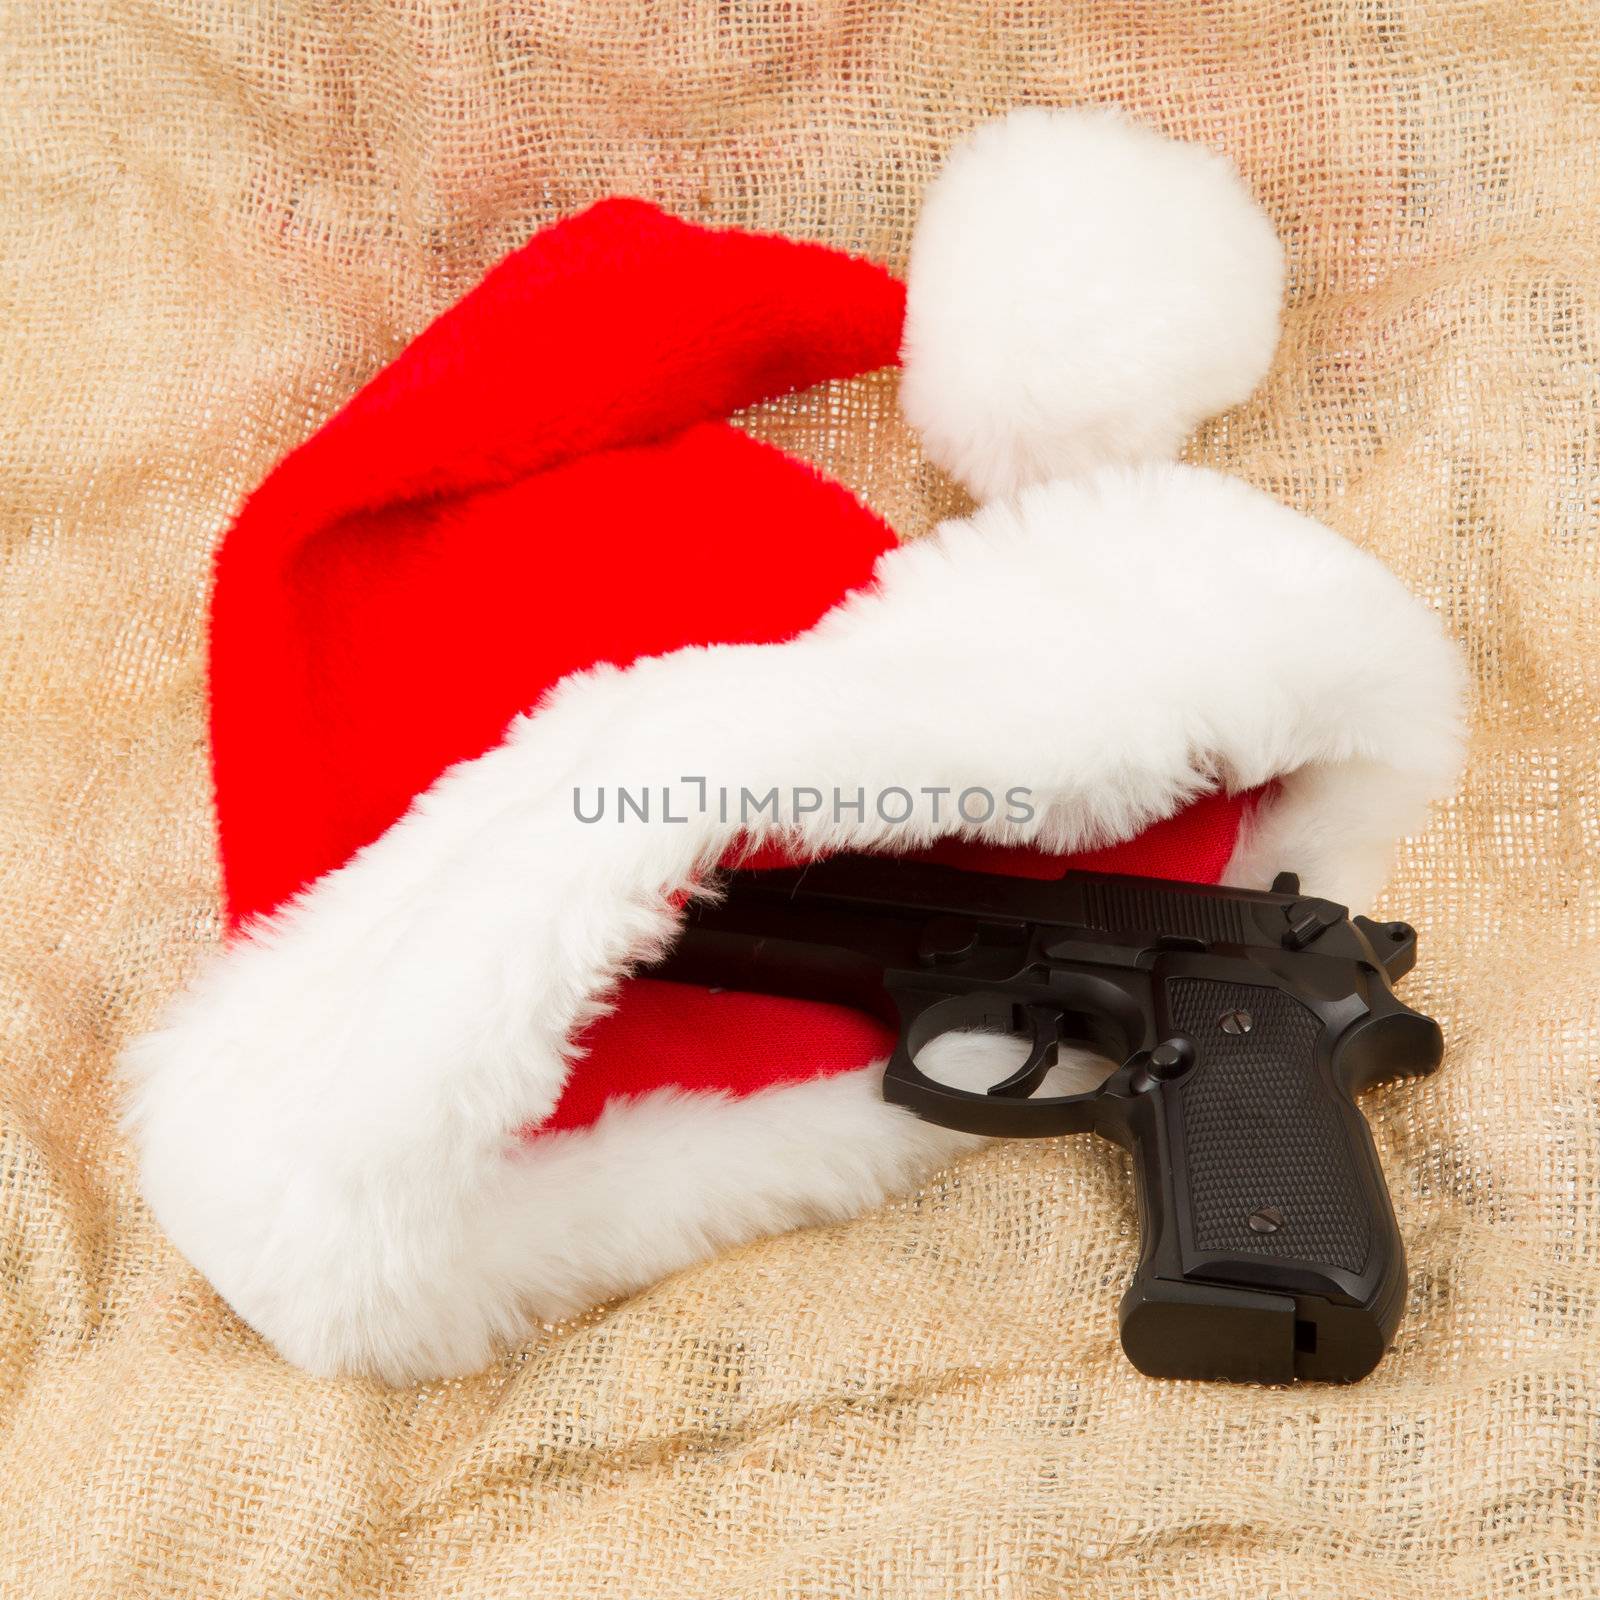 Weapon (firearm) concealed in santas hat by michaklootwijk